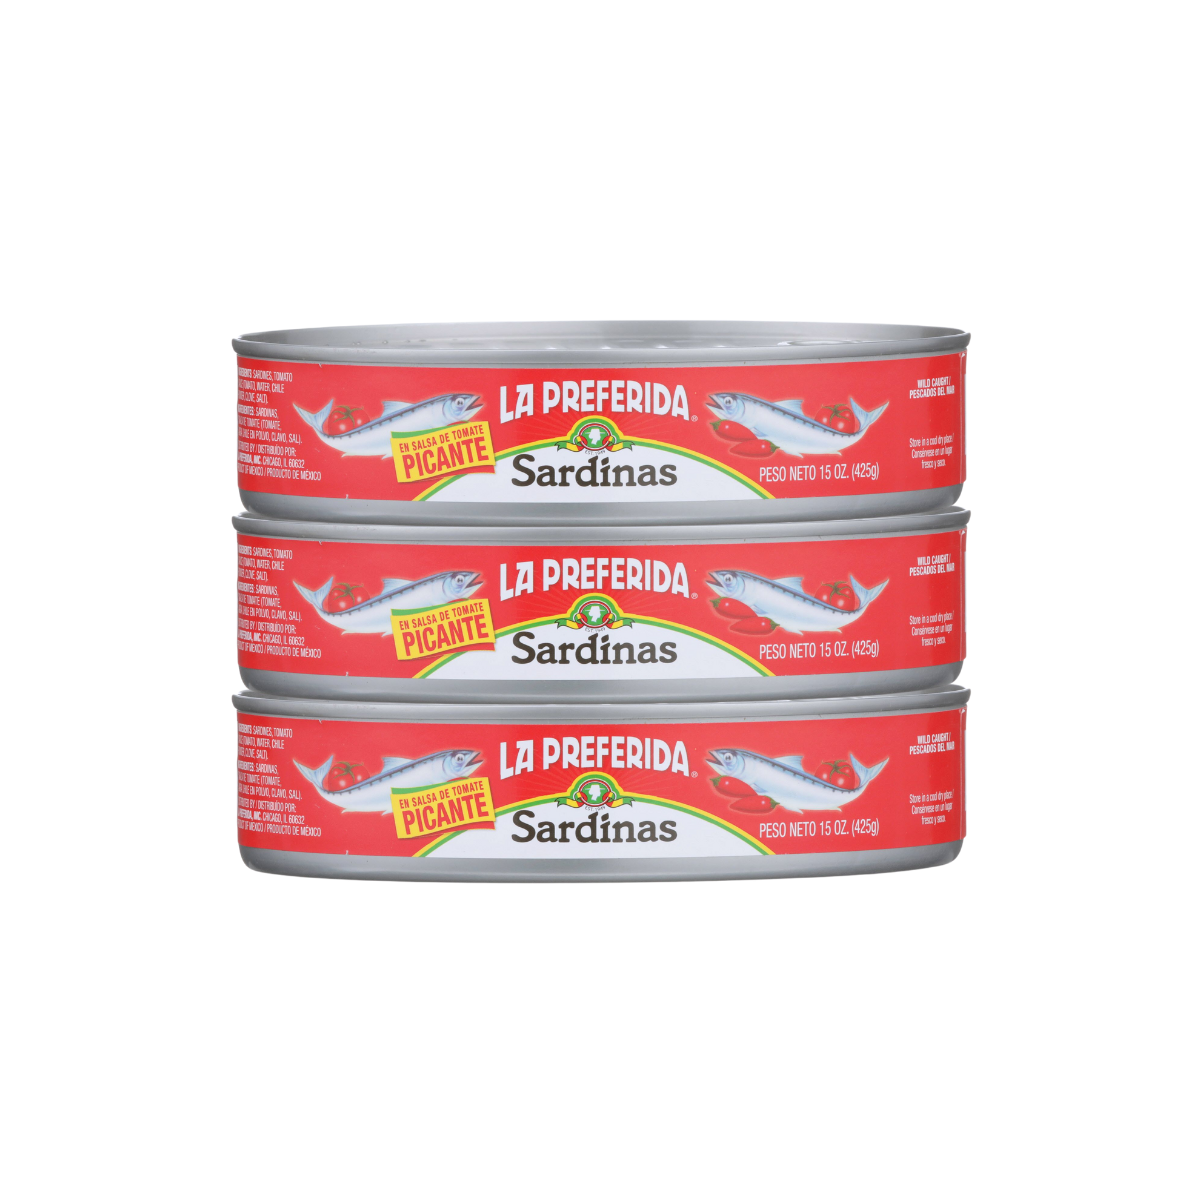 Sardines in Spicy Tomato Sauce, 15 OZ